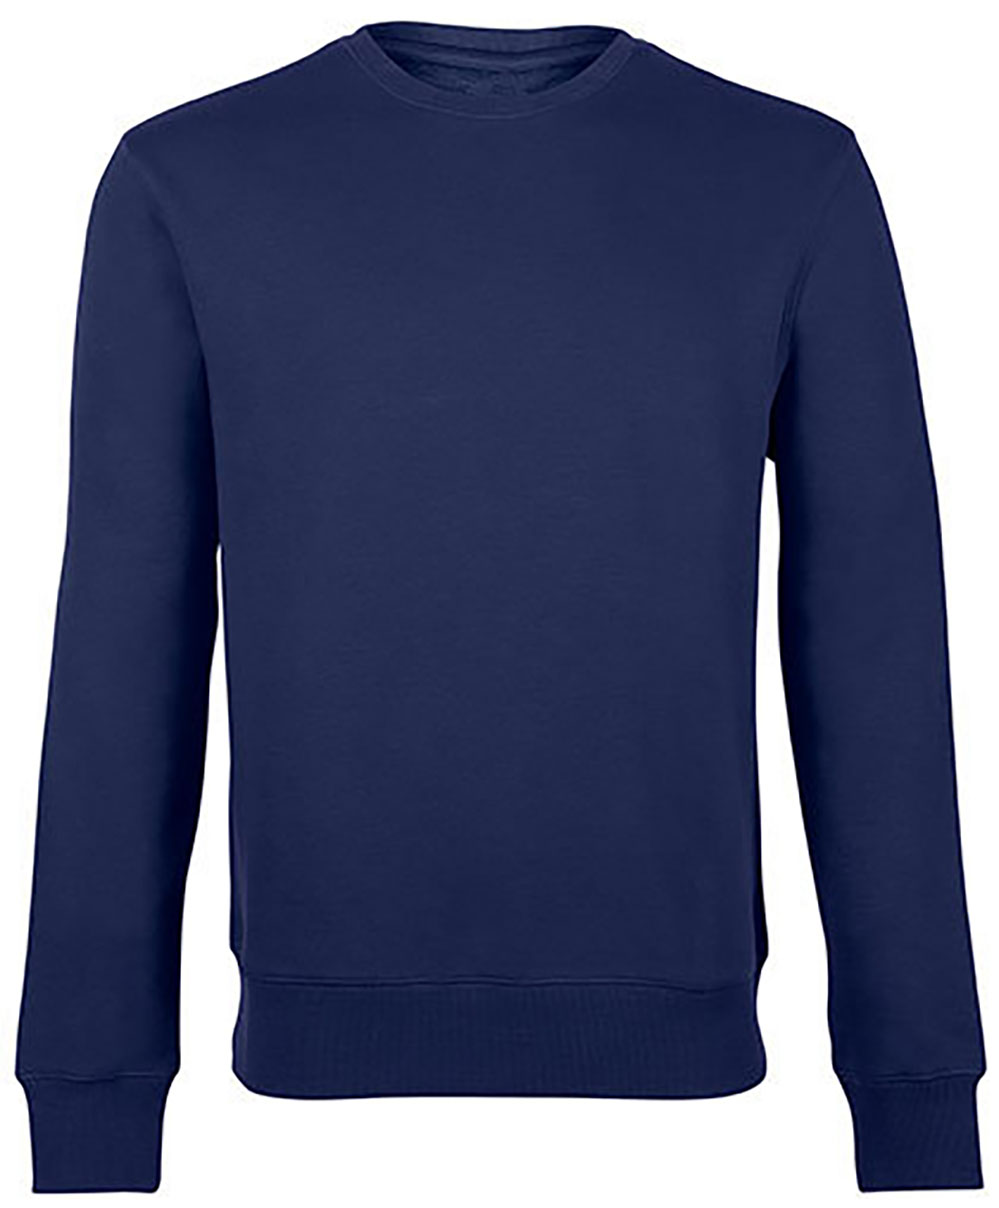 Unisex Sweatshirt HRM902